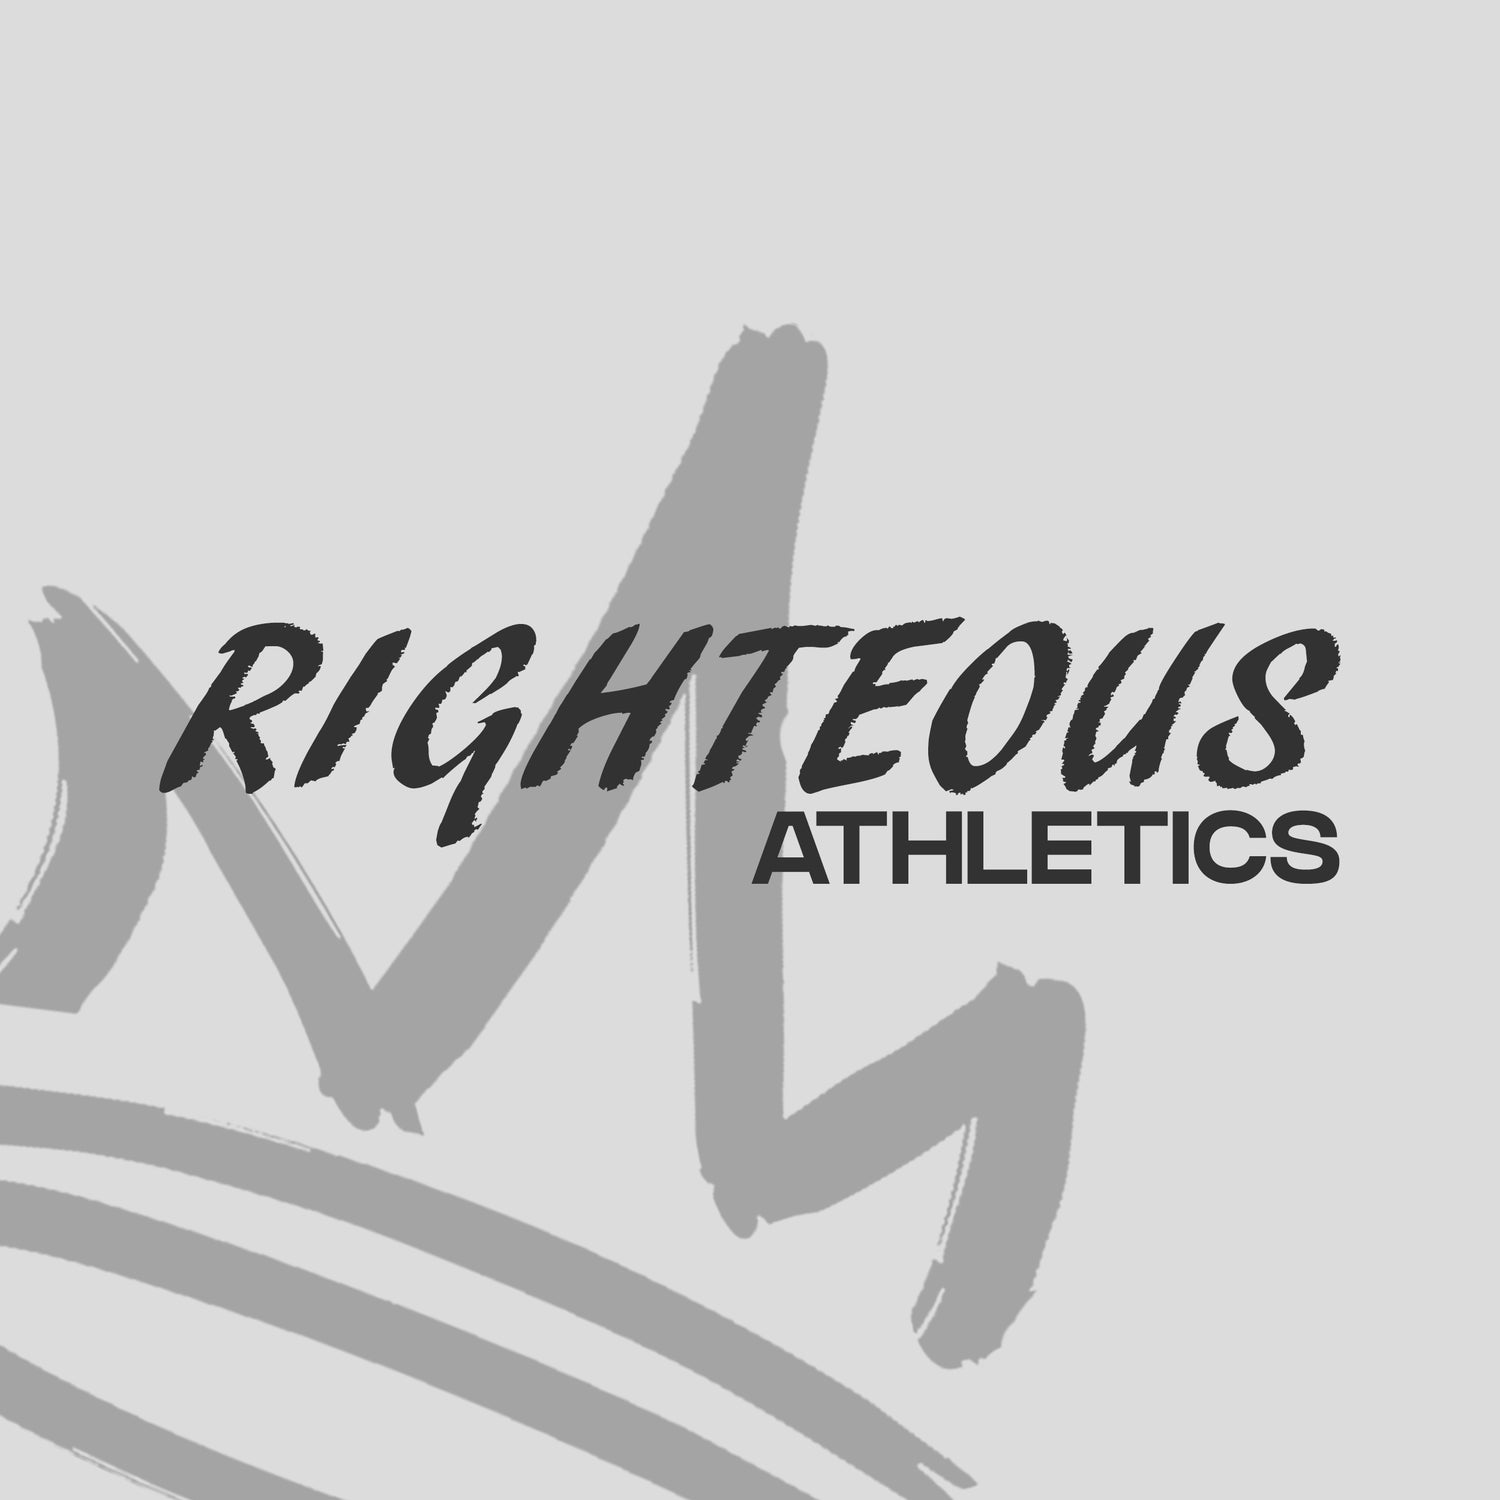 RIGHTEOUS ATHLETICS